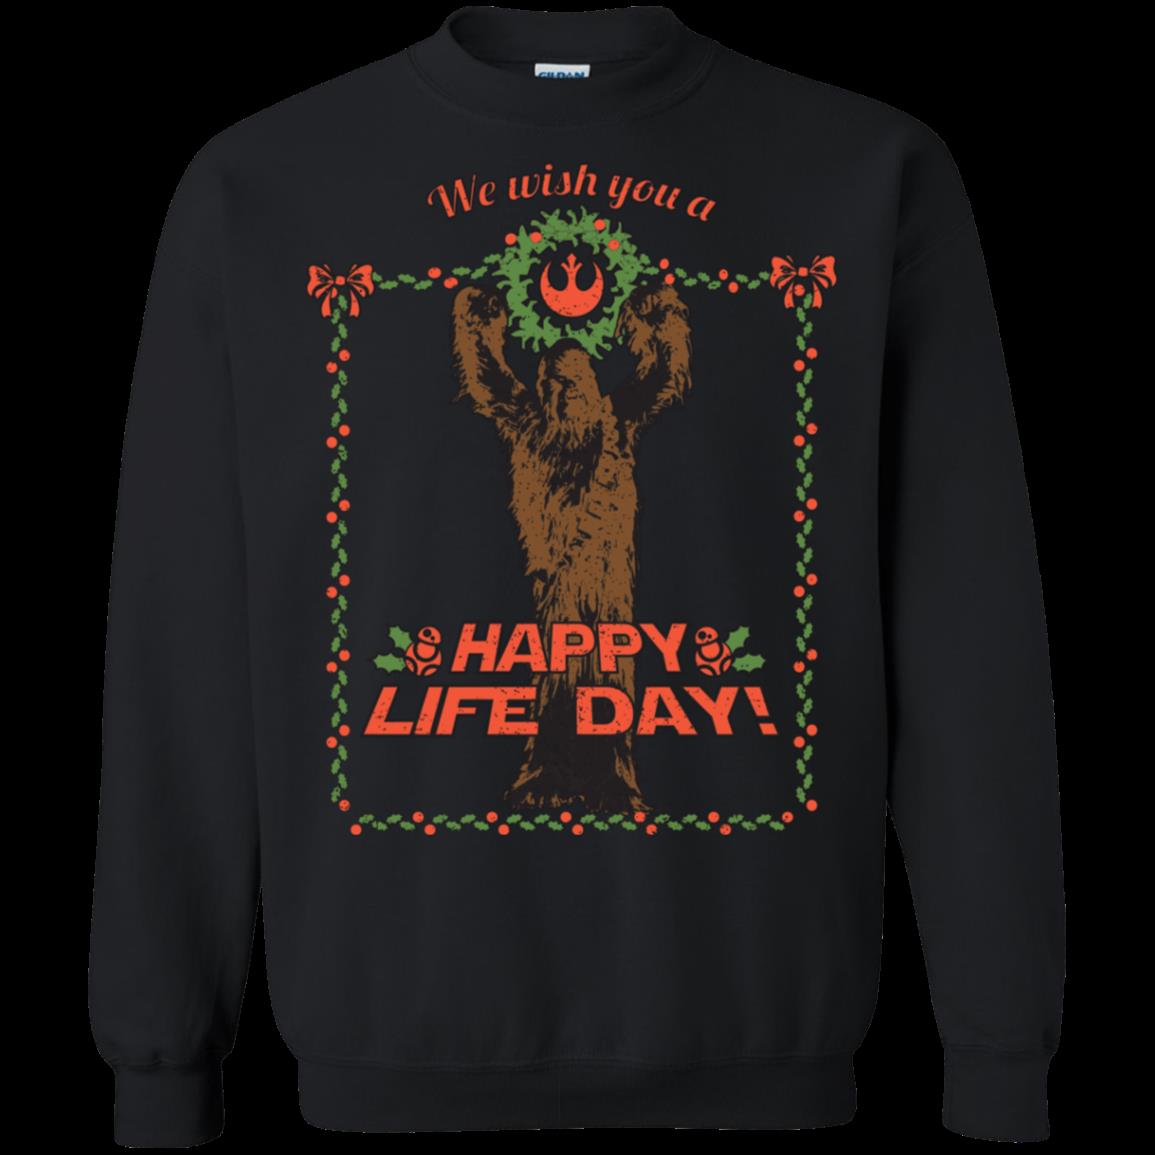 S S Happy Life Day From Chewie! Star Wars Chewbacca Christmas Shirts T Shirt Hoodies Sweatshirt